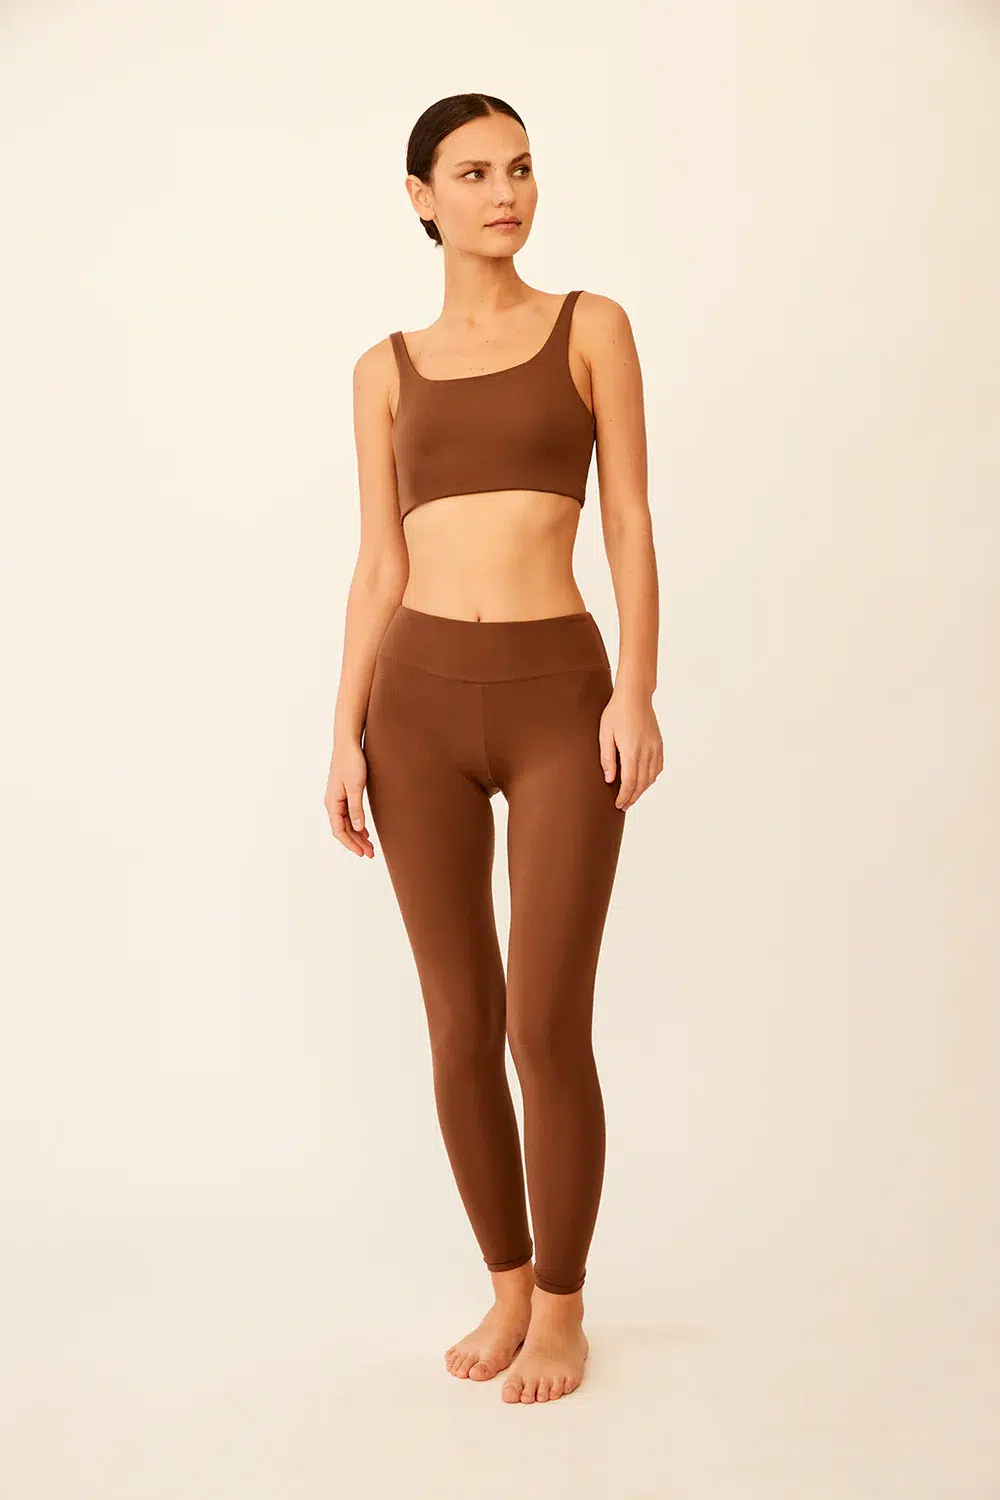 A model wears a brown sports bra and leggings set. 